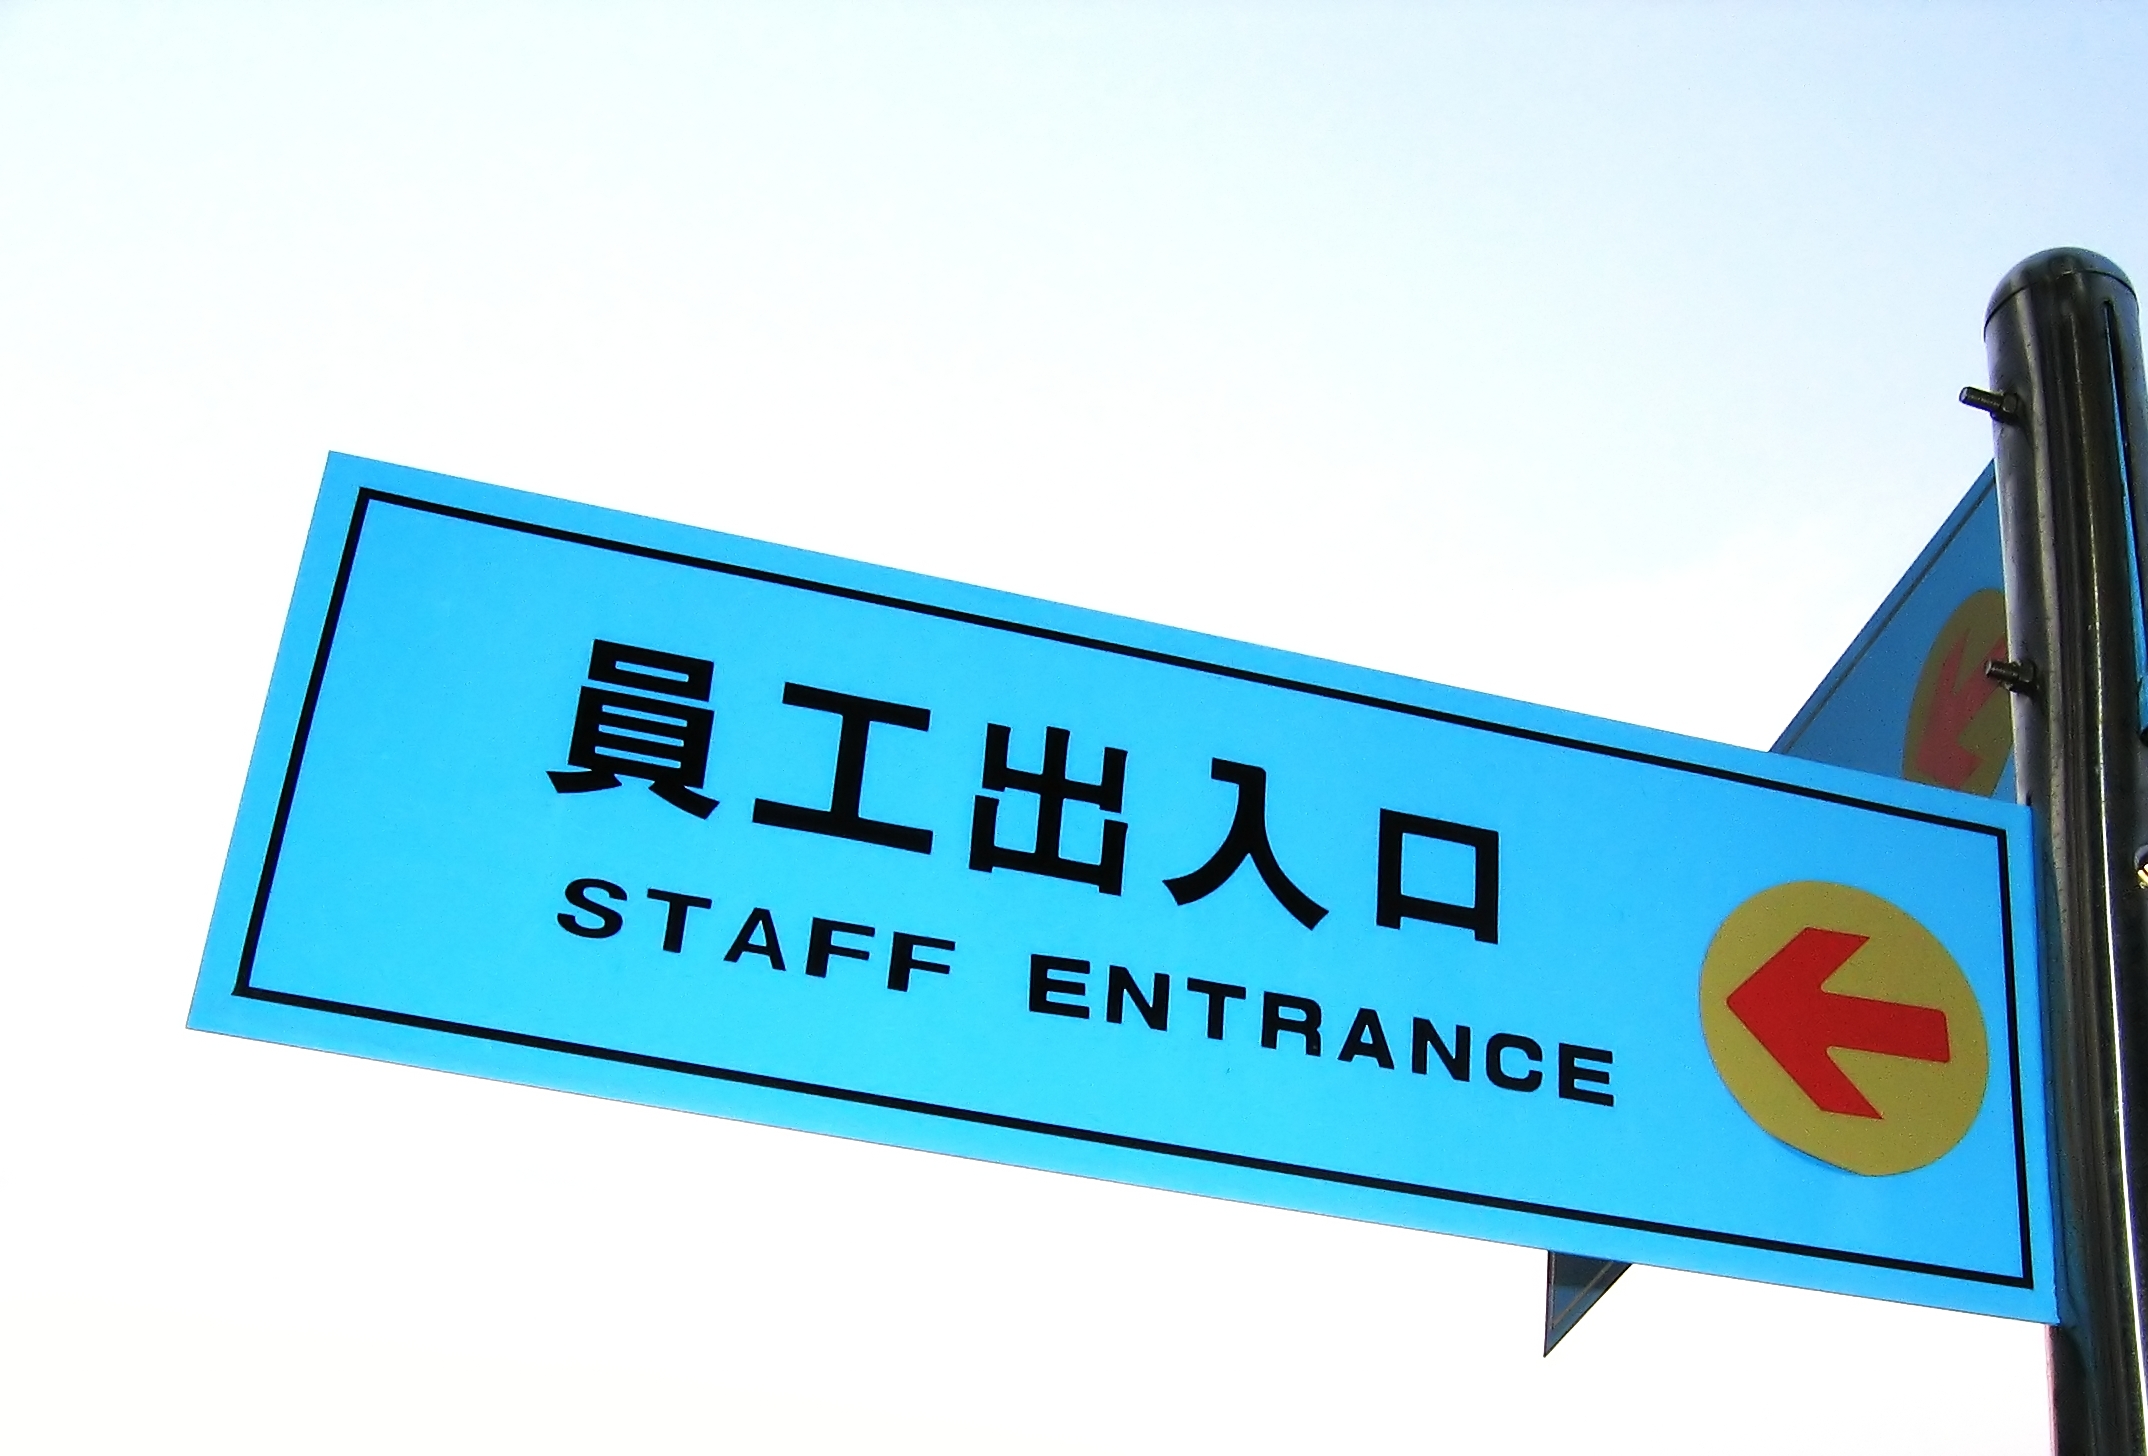 Staff entrance sign photo